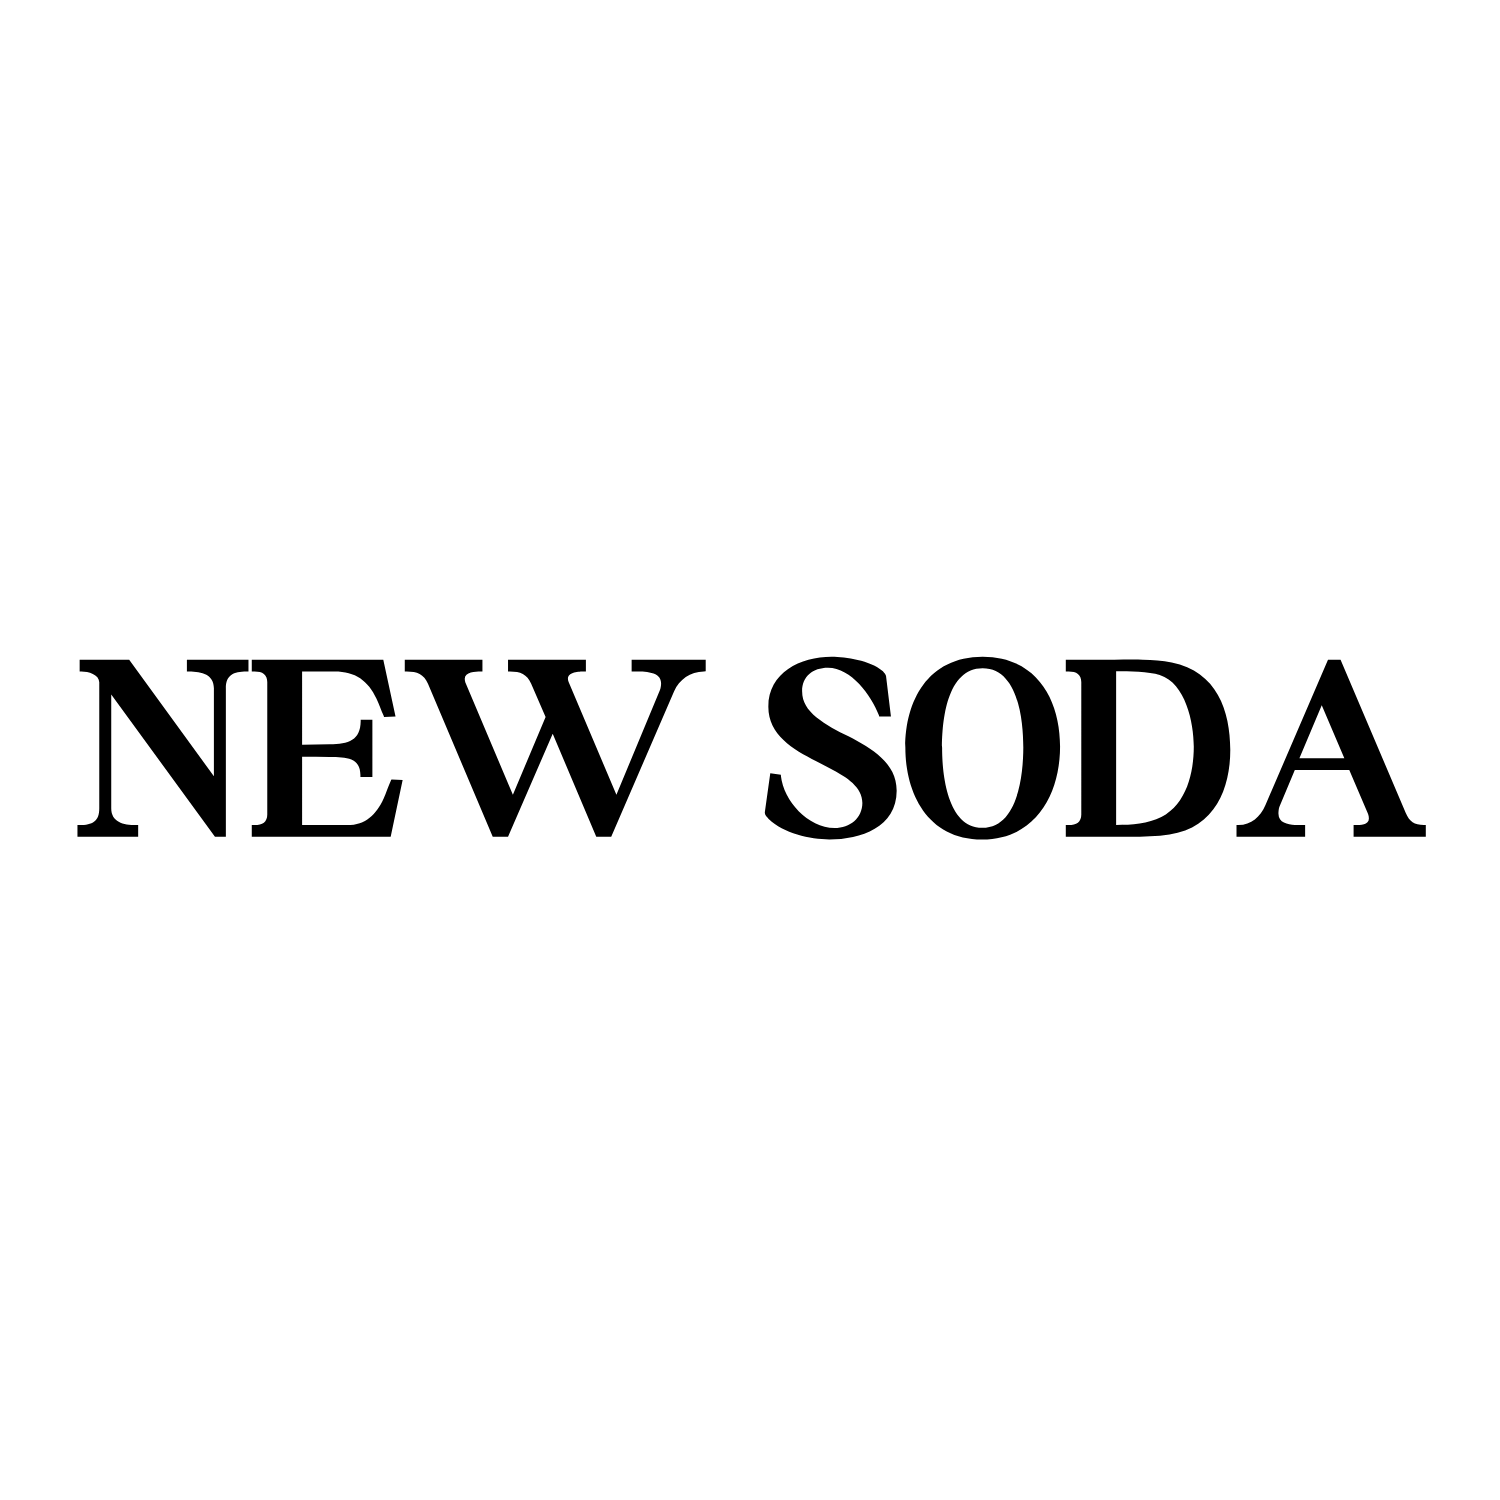 New soda